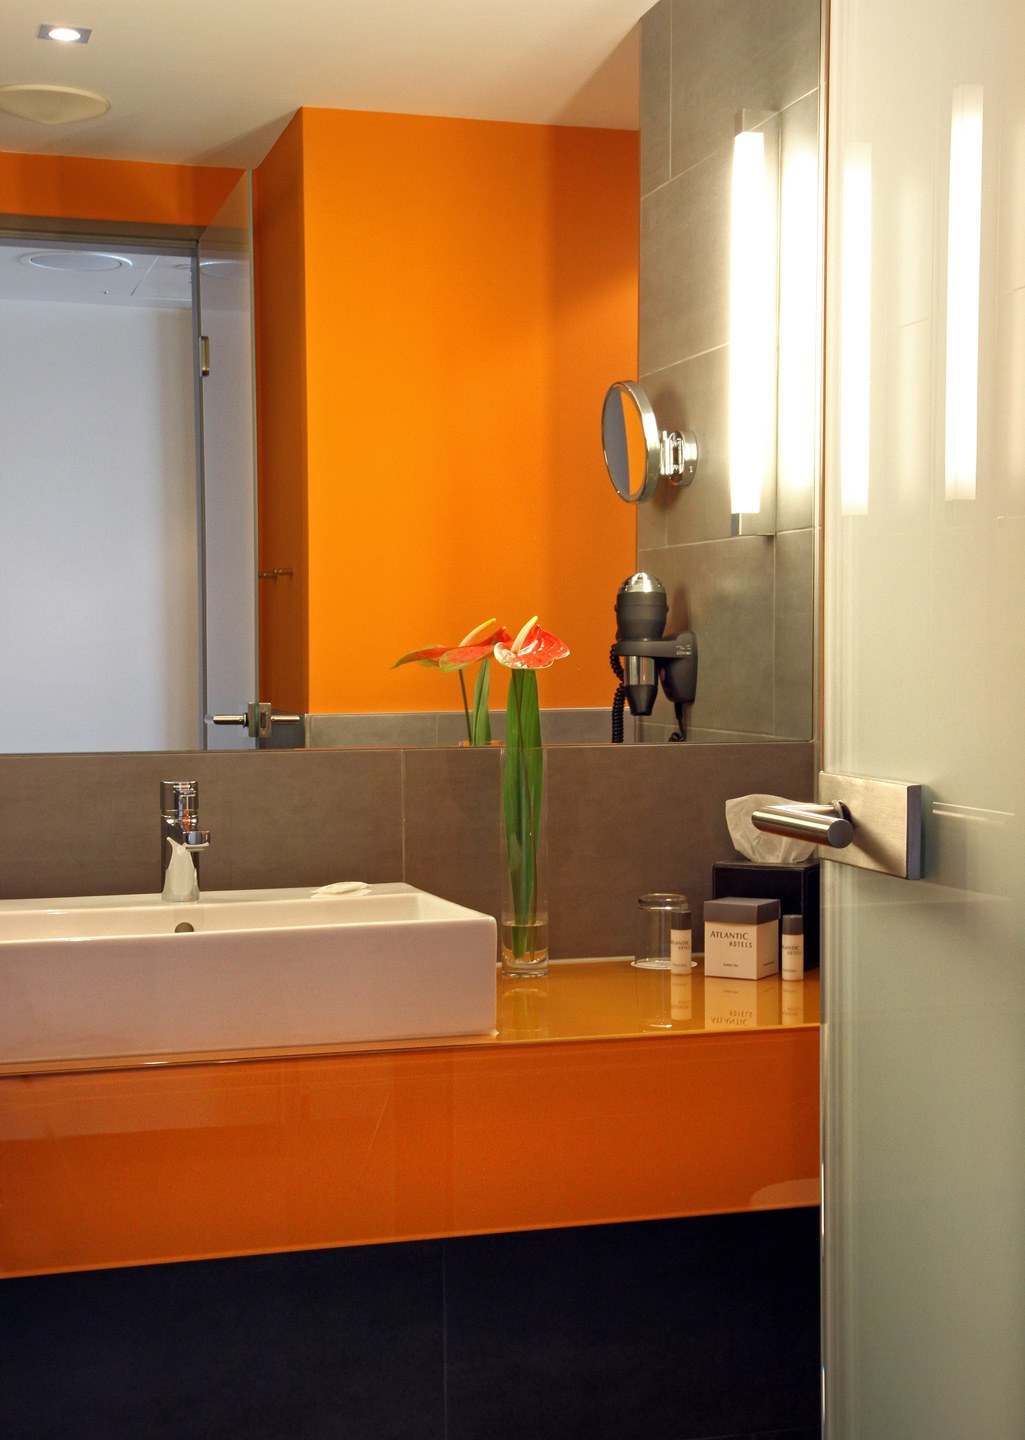 Bathroom of the Superior Room in the ATLANTIC Hotel Kiel